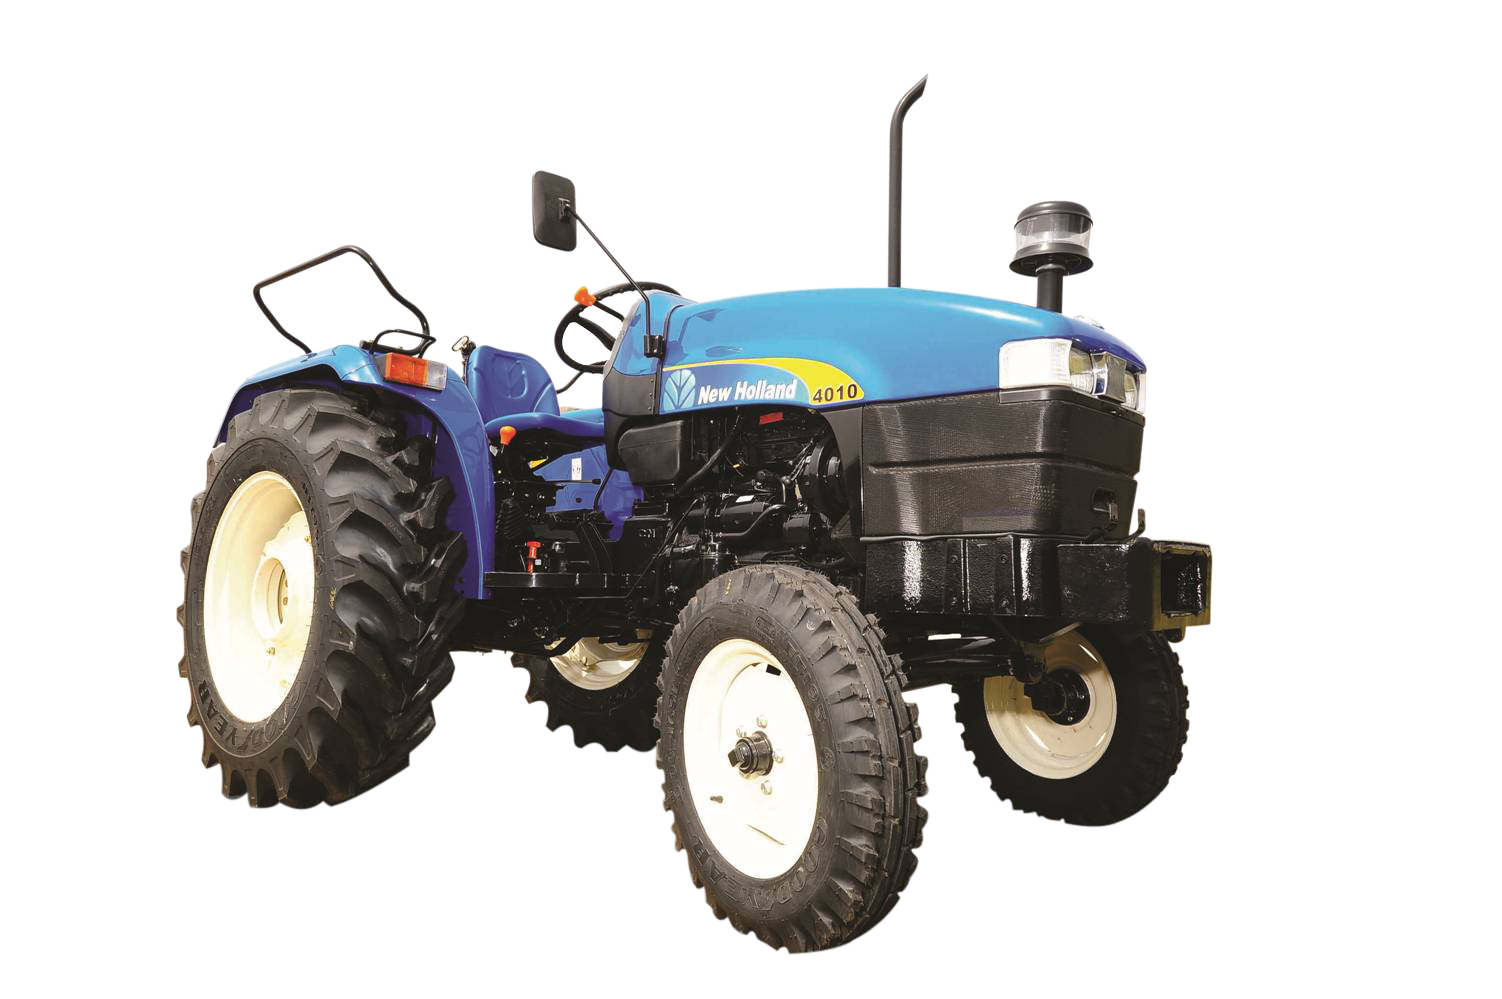 new-holland-4010-farm-tractor-new-holland-farm-tractors-new-holland